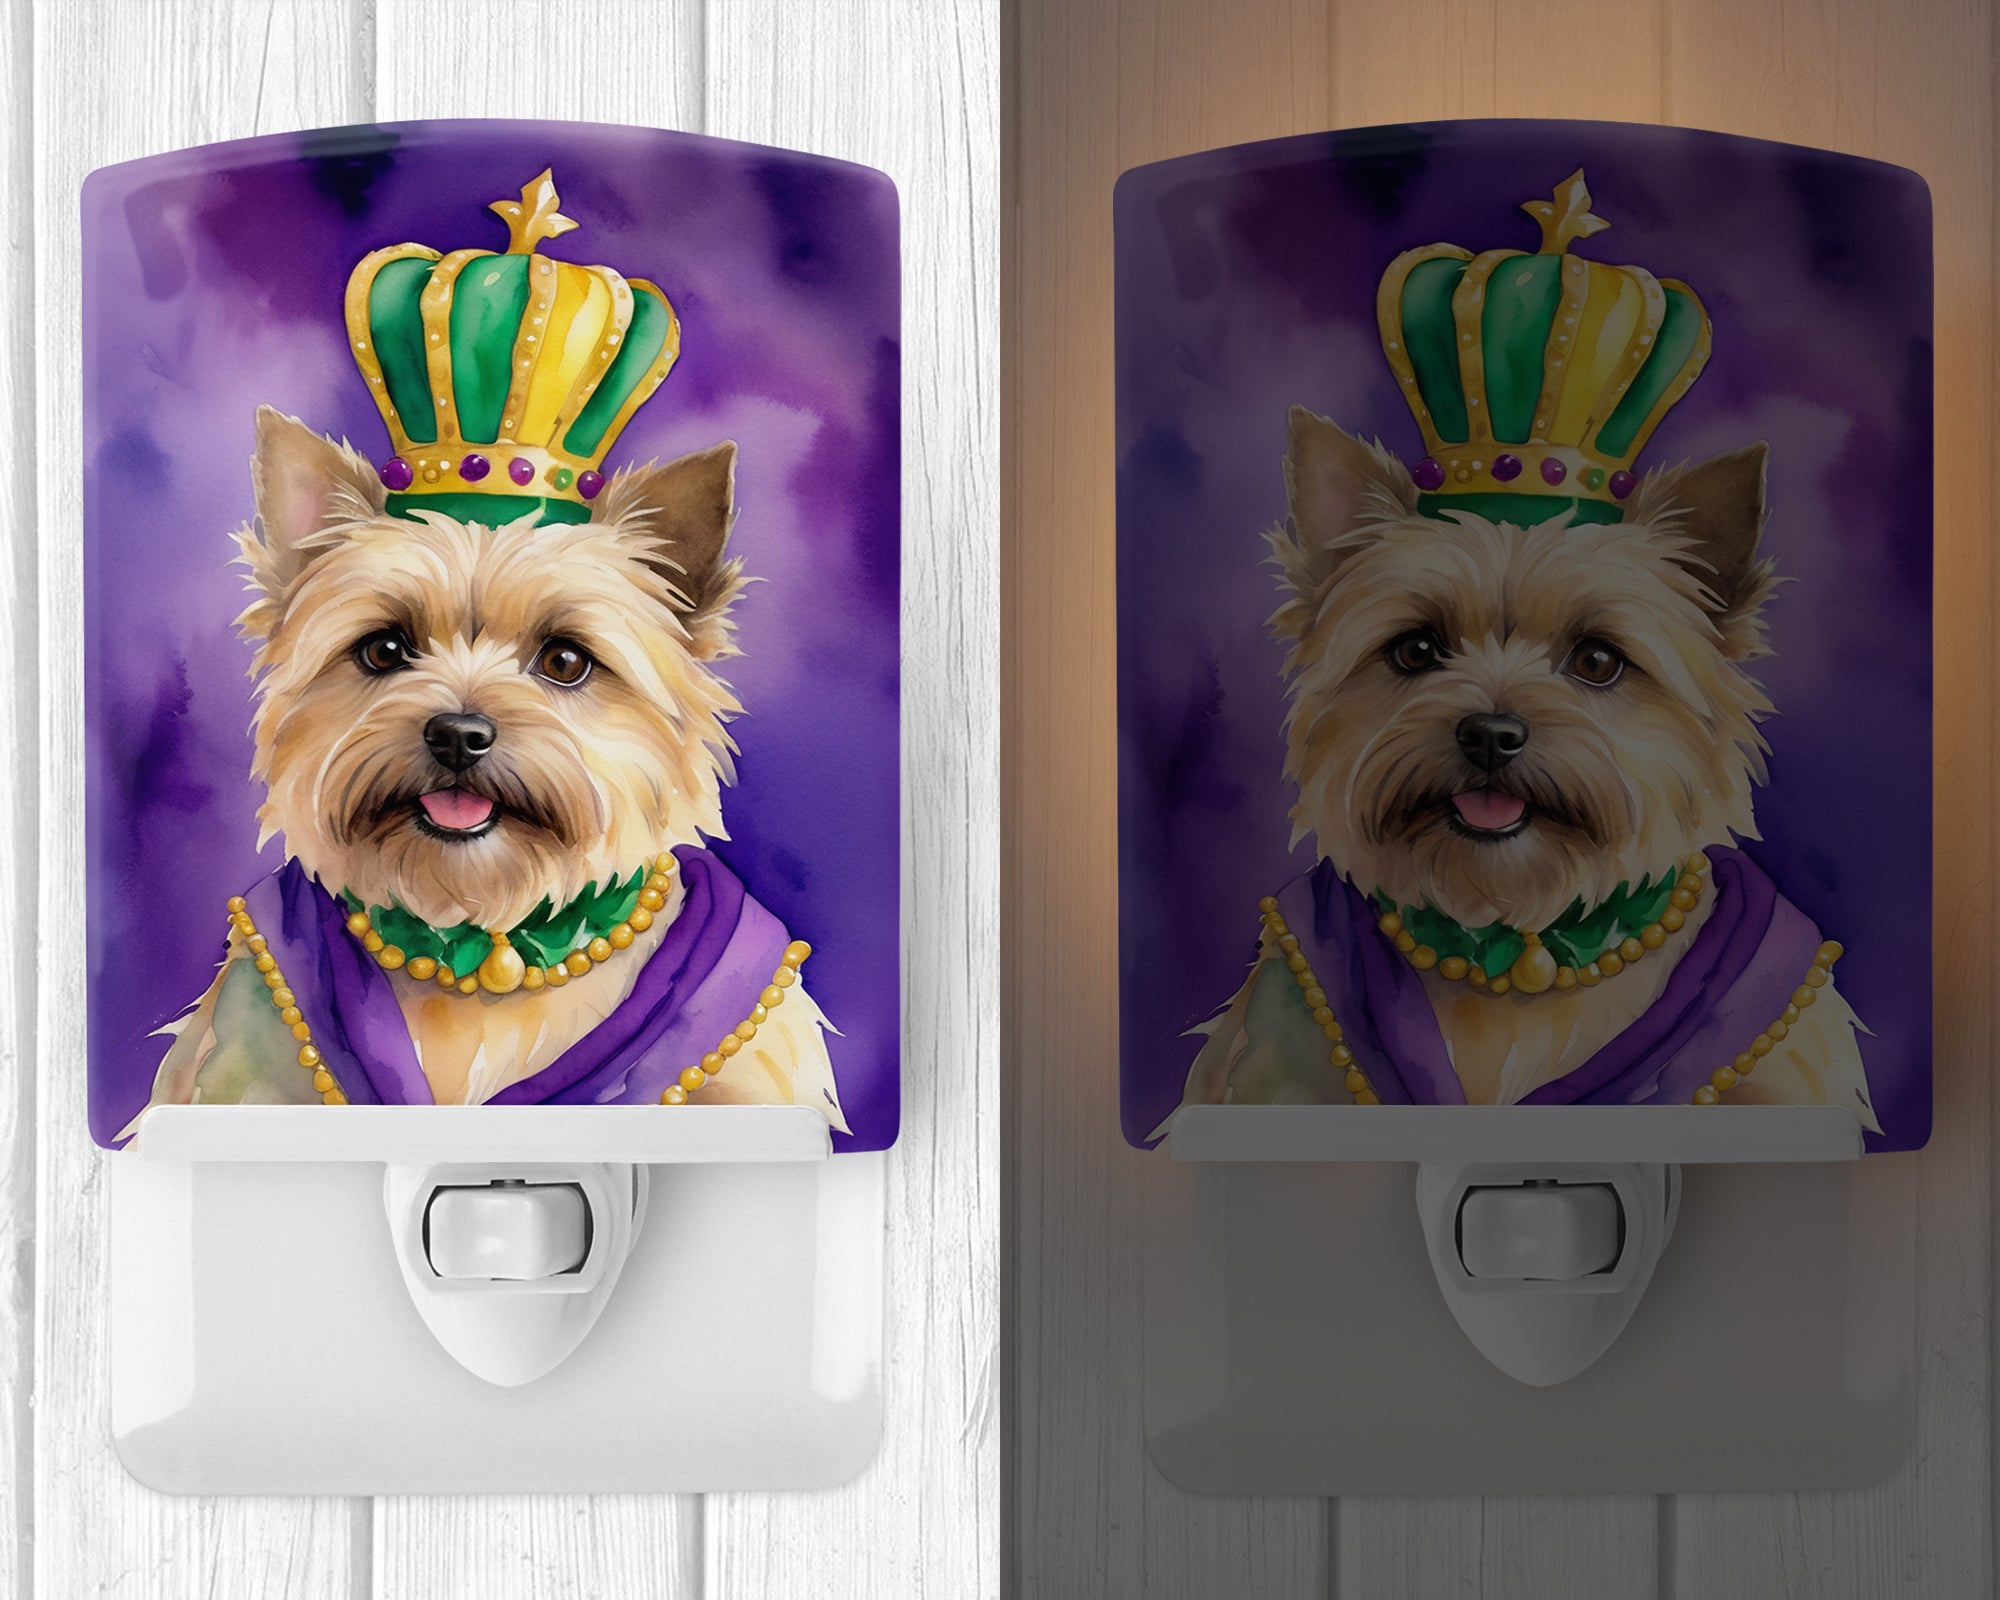 Buy this Cairn Terrier King of Mardi Gras Ceramic Night Light